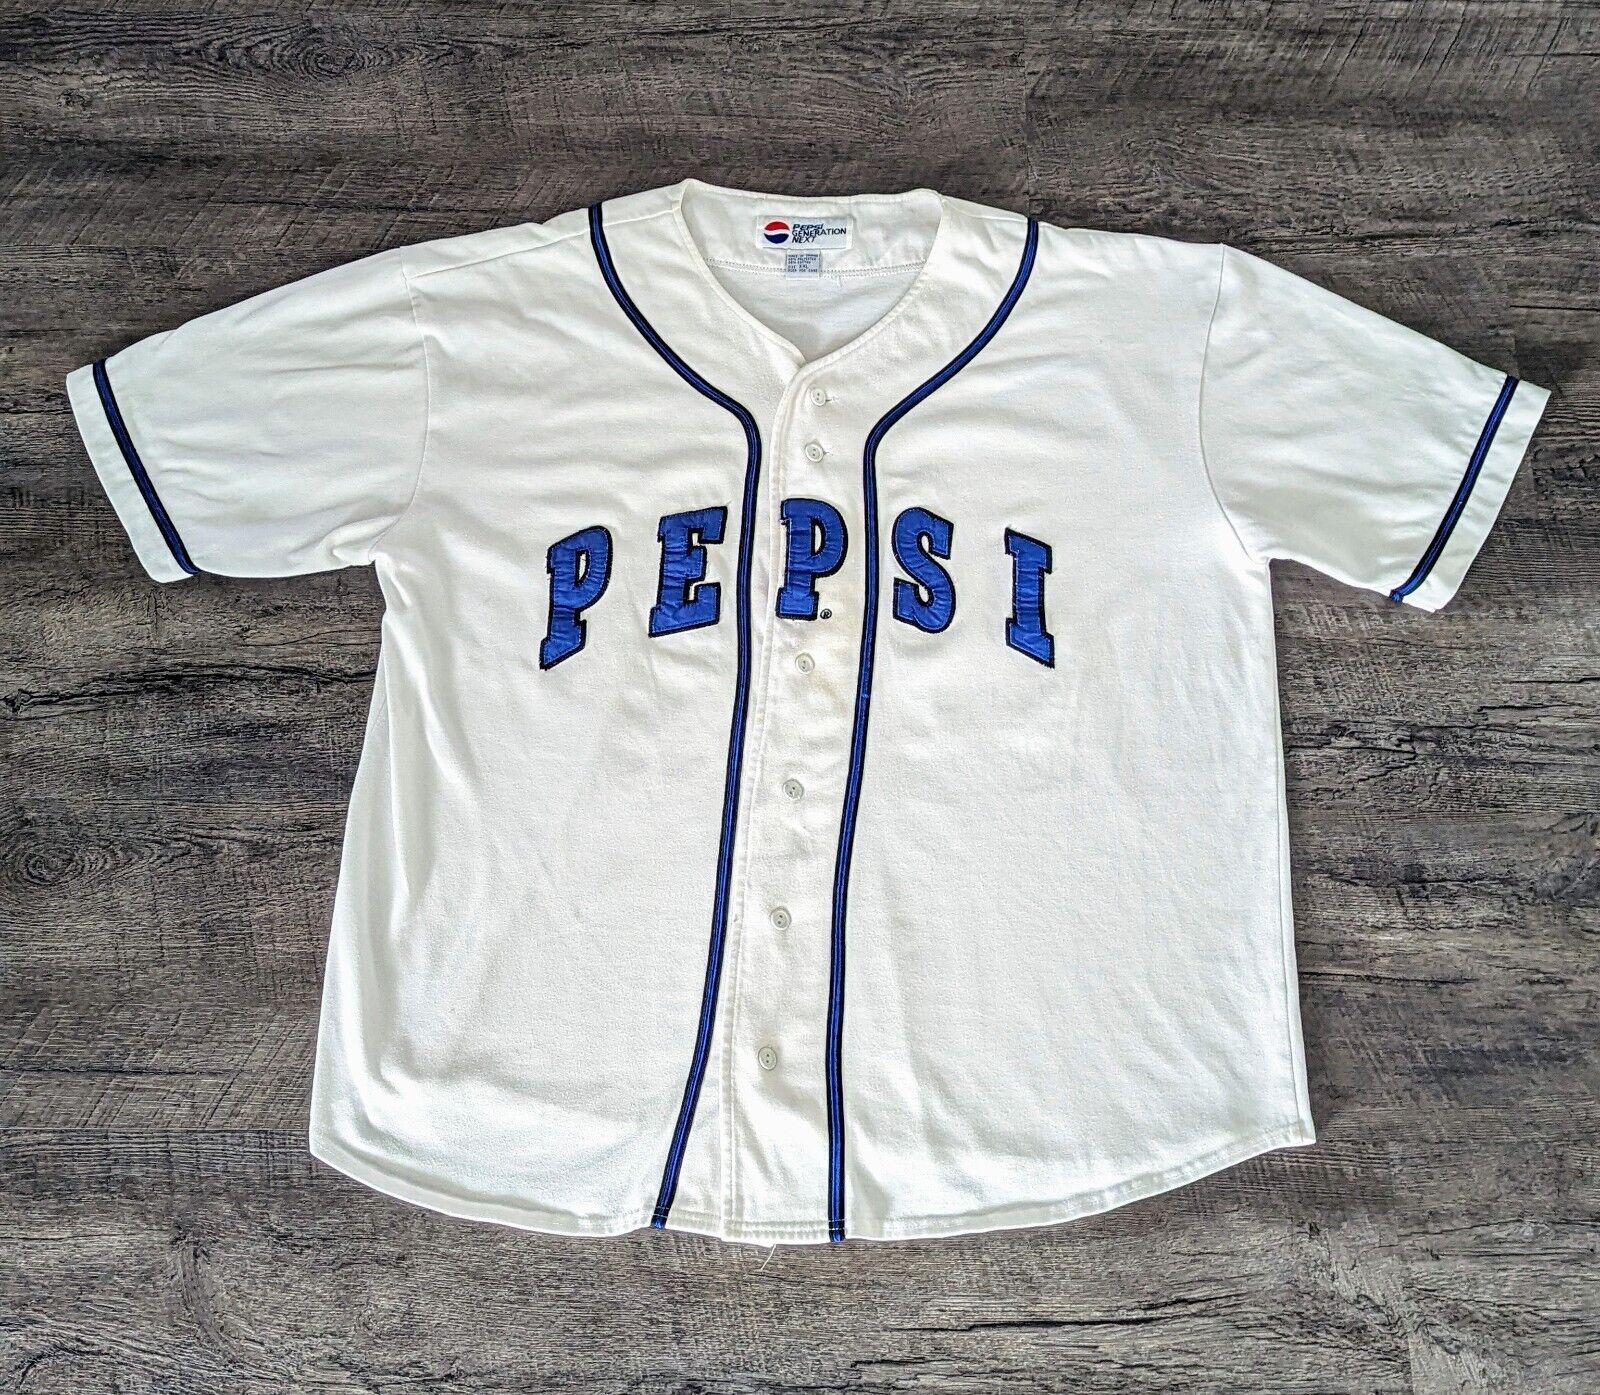 Pepsi-Cola Generation Next 90s Stitched Button Down Baseball Jersey Size XXL Y2K